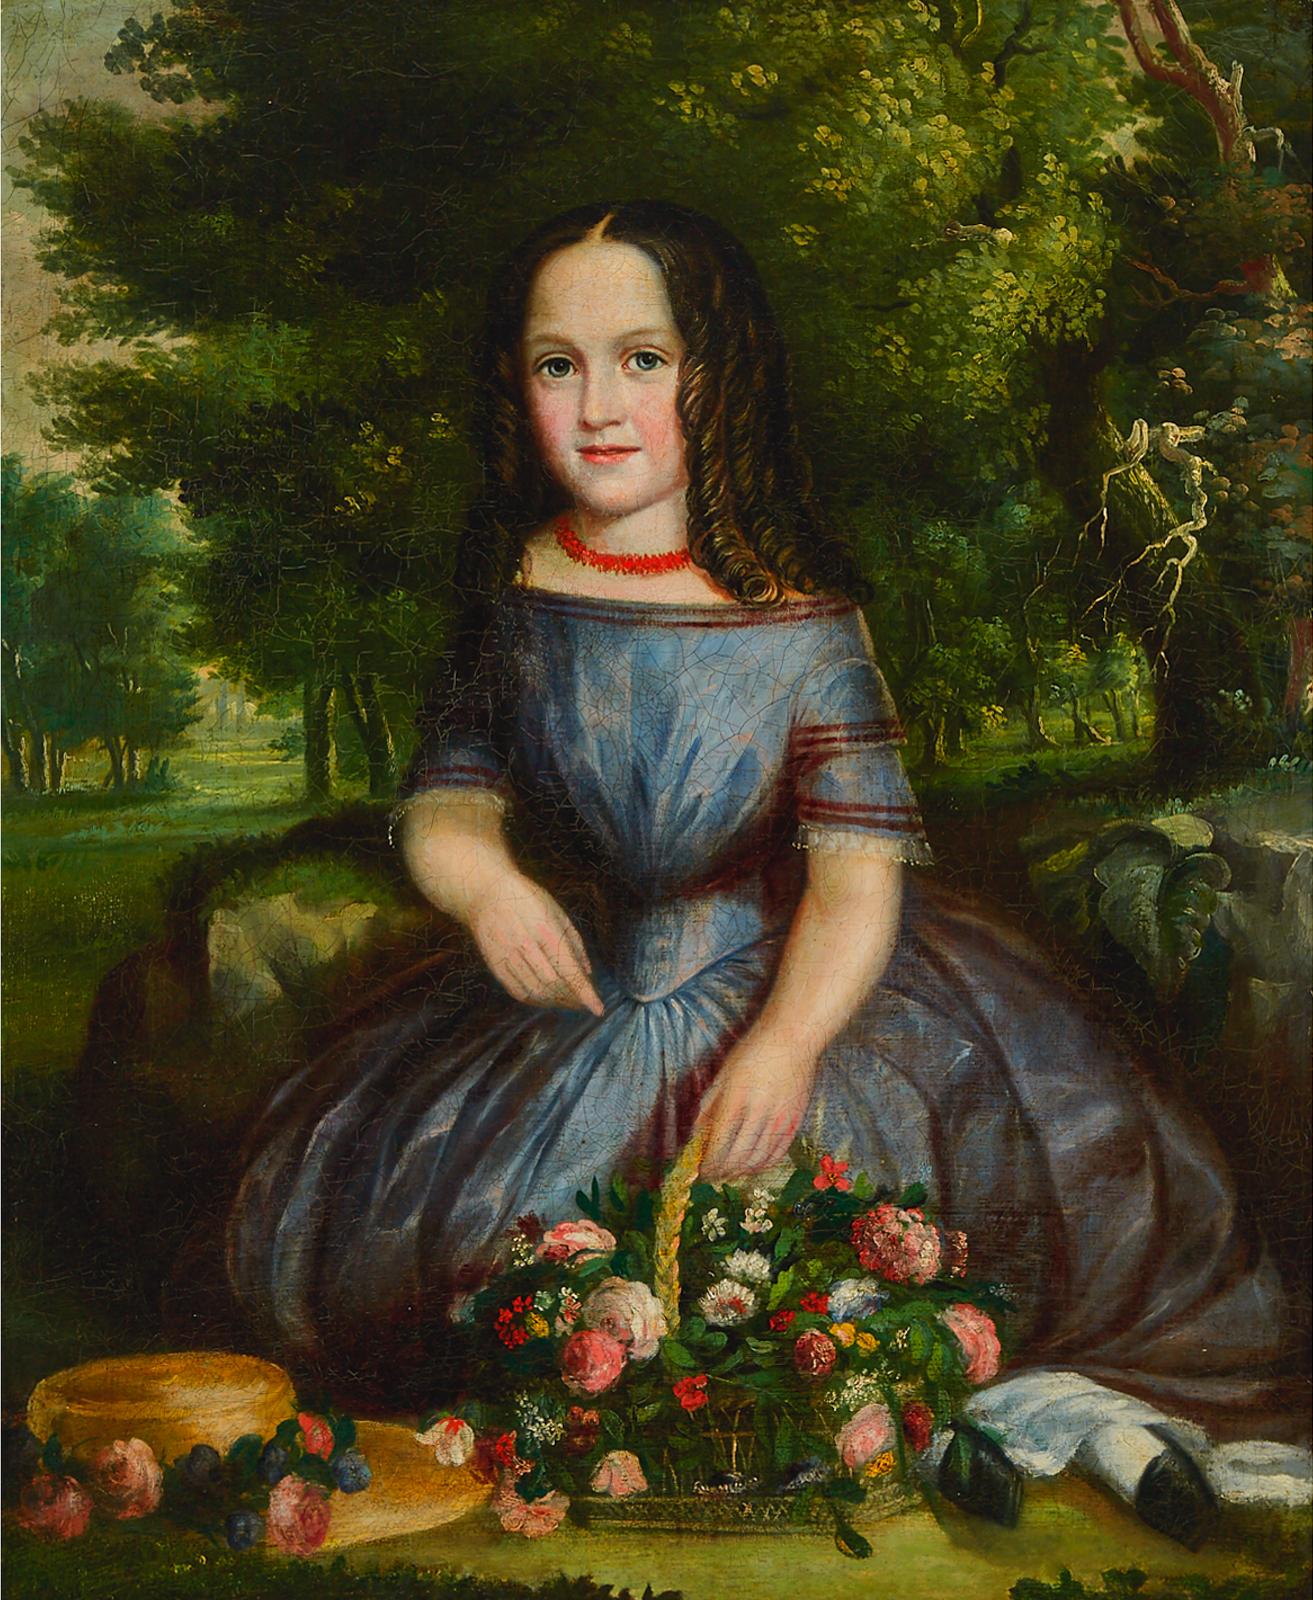 Robert Reginald Whale (1805-1887) - Portrait Of A Girl In A Landscape